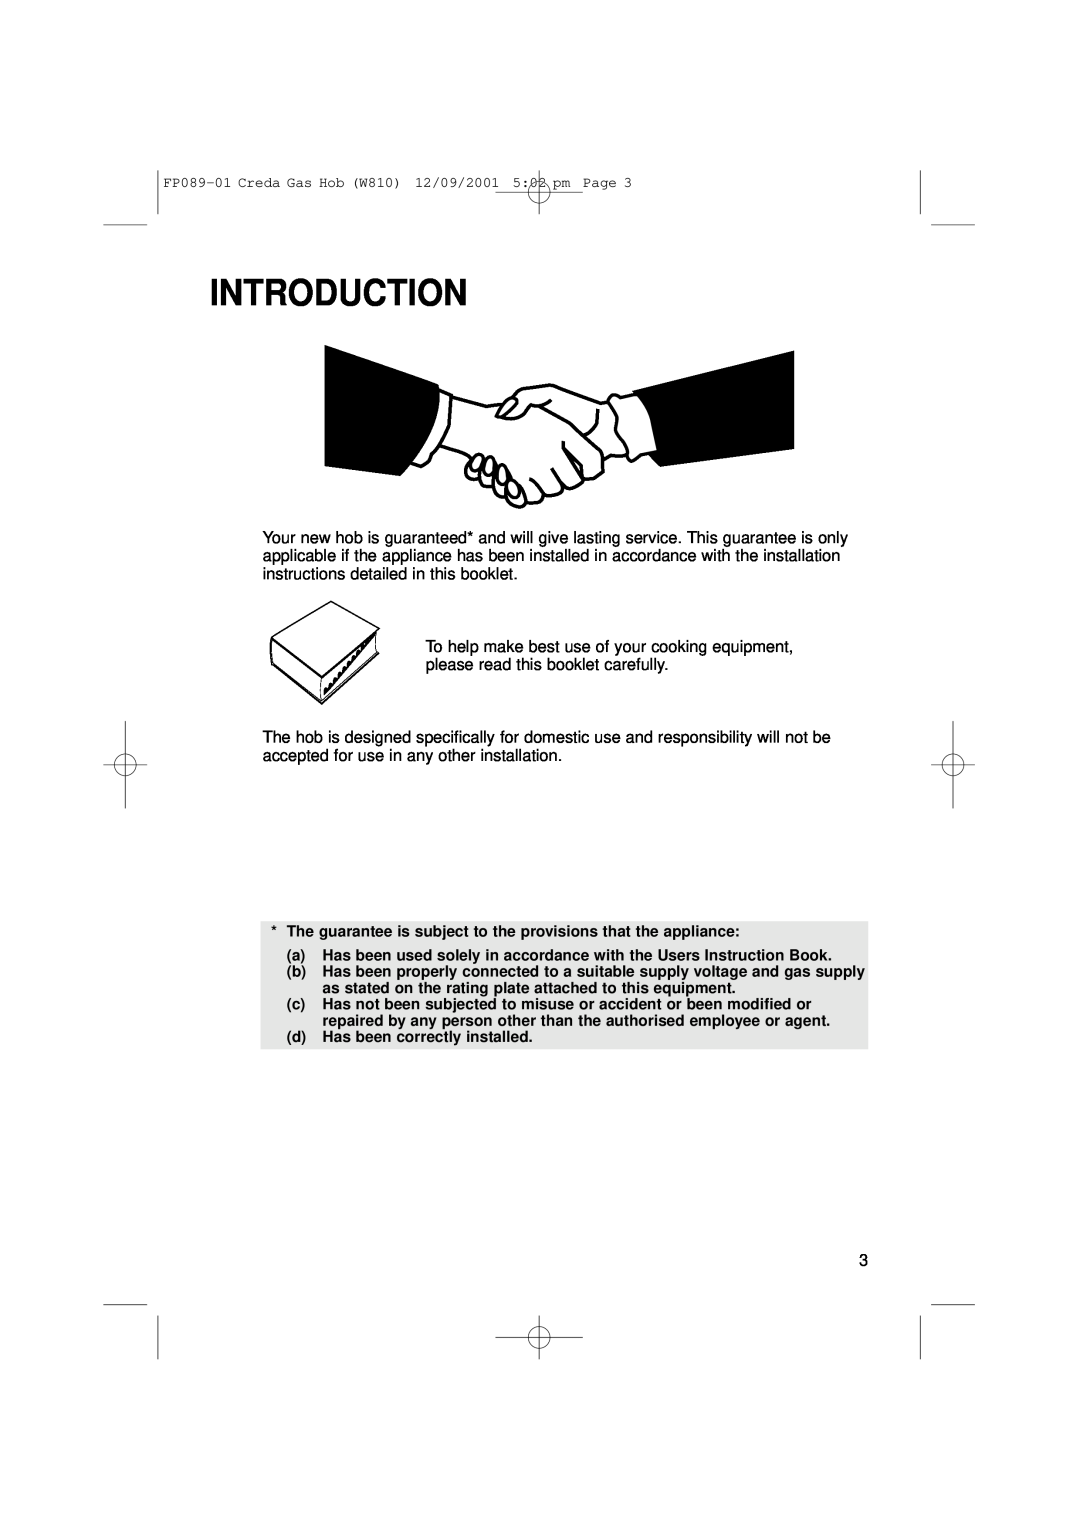 Creda W810 manual Introduction 